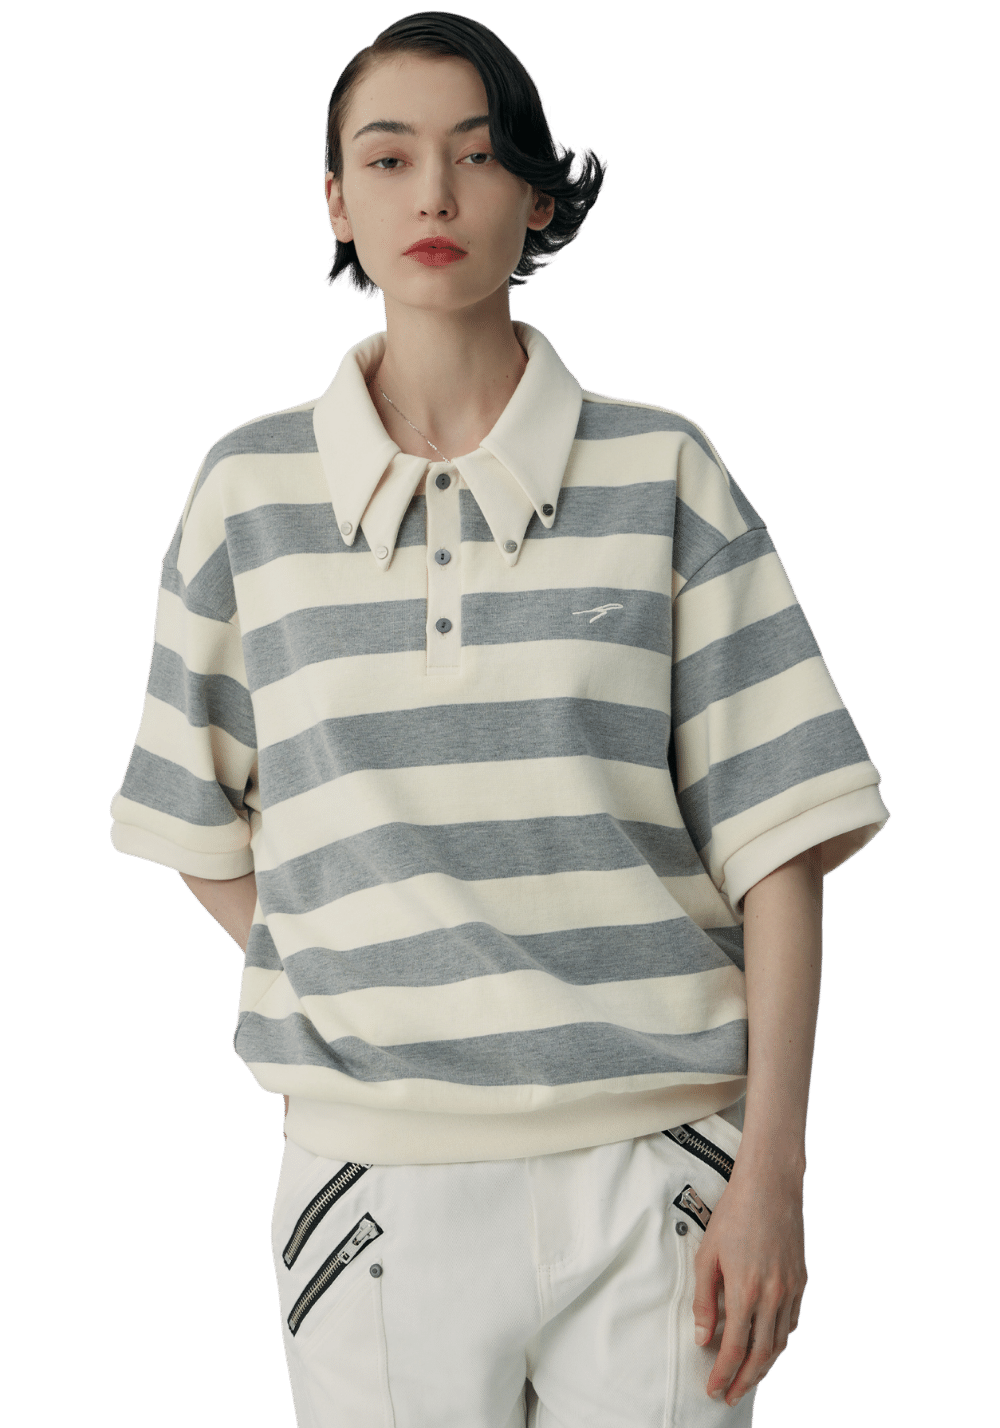 Striped Polo Shirt - PSYLOS 1, Striped Polo Shirt, Shirt, The Last Redemption, PSYLOS 1